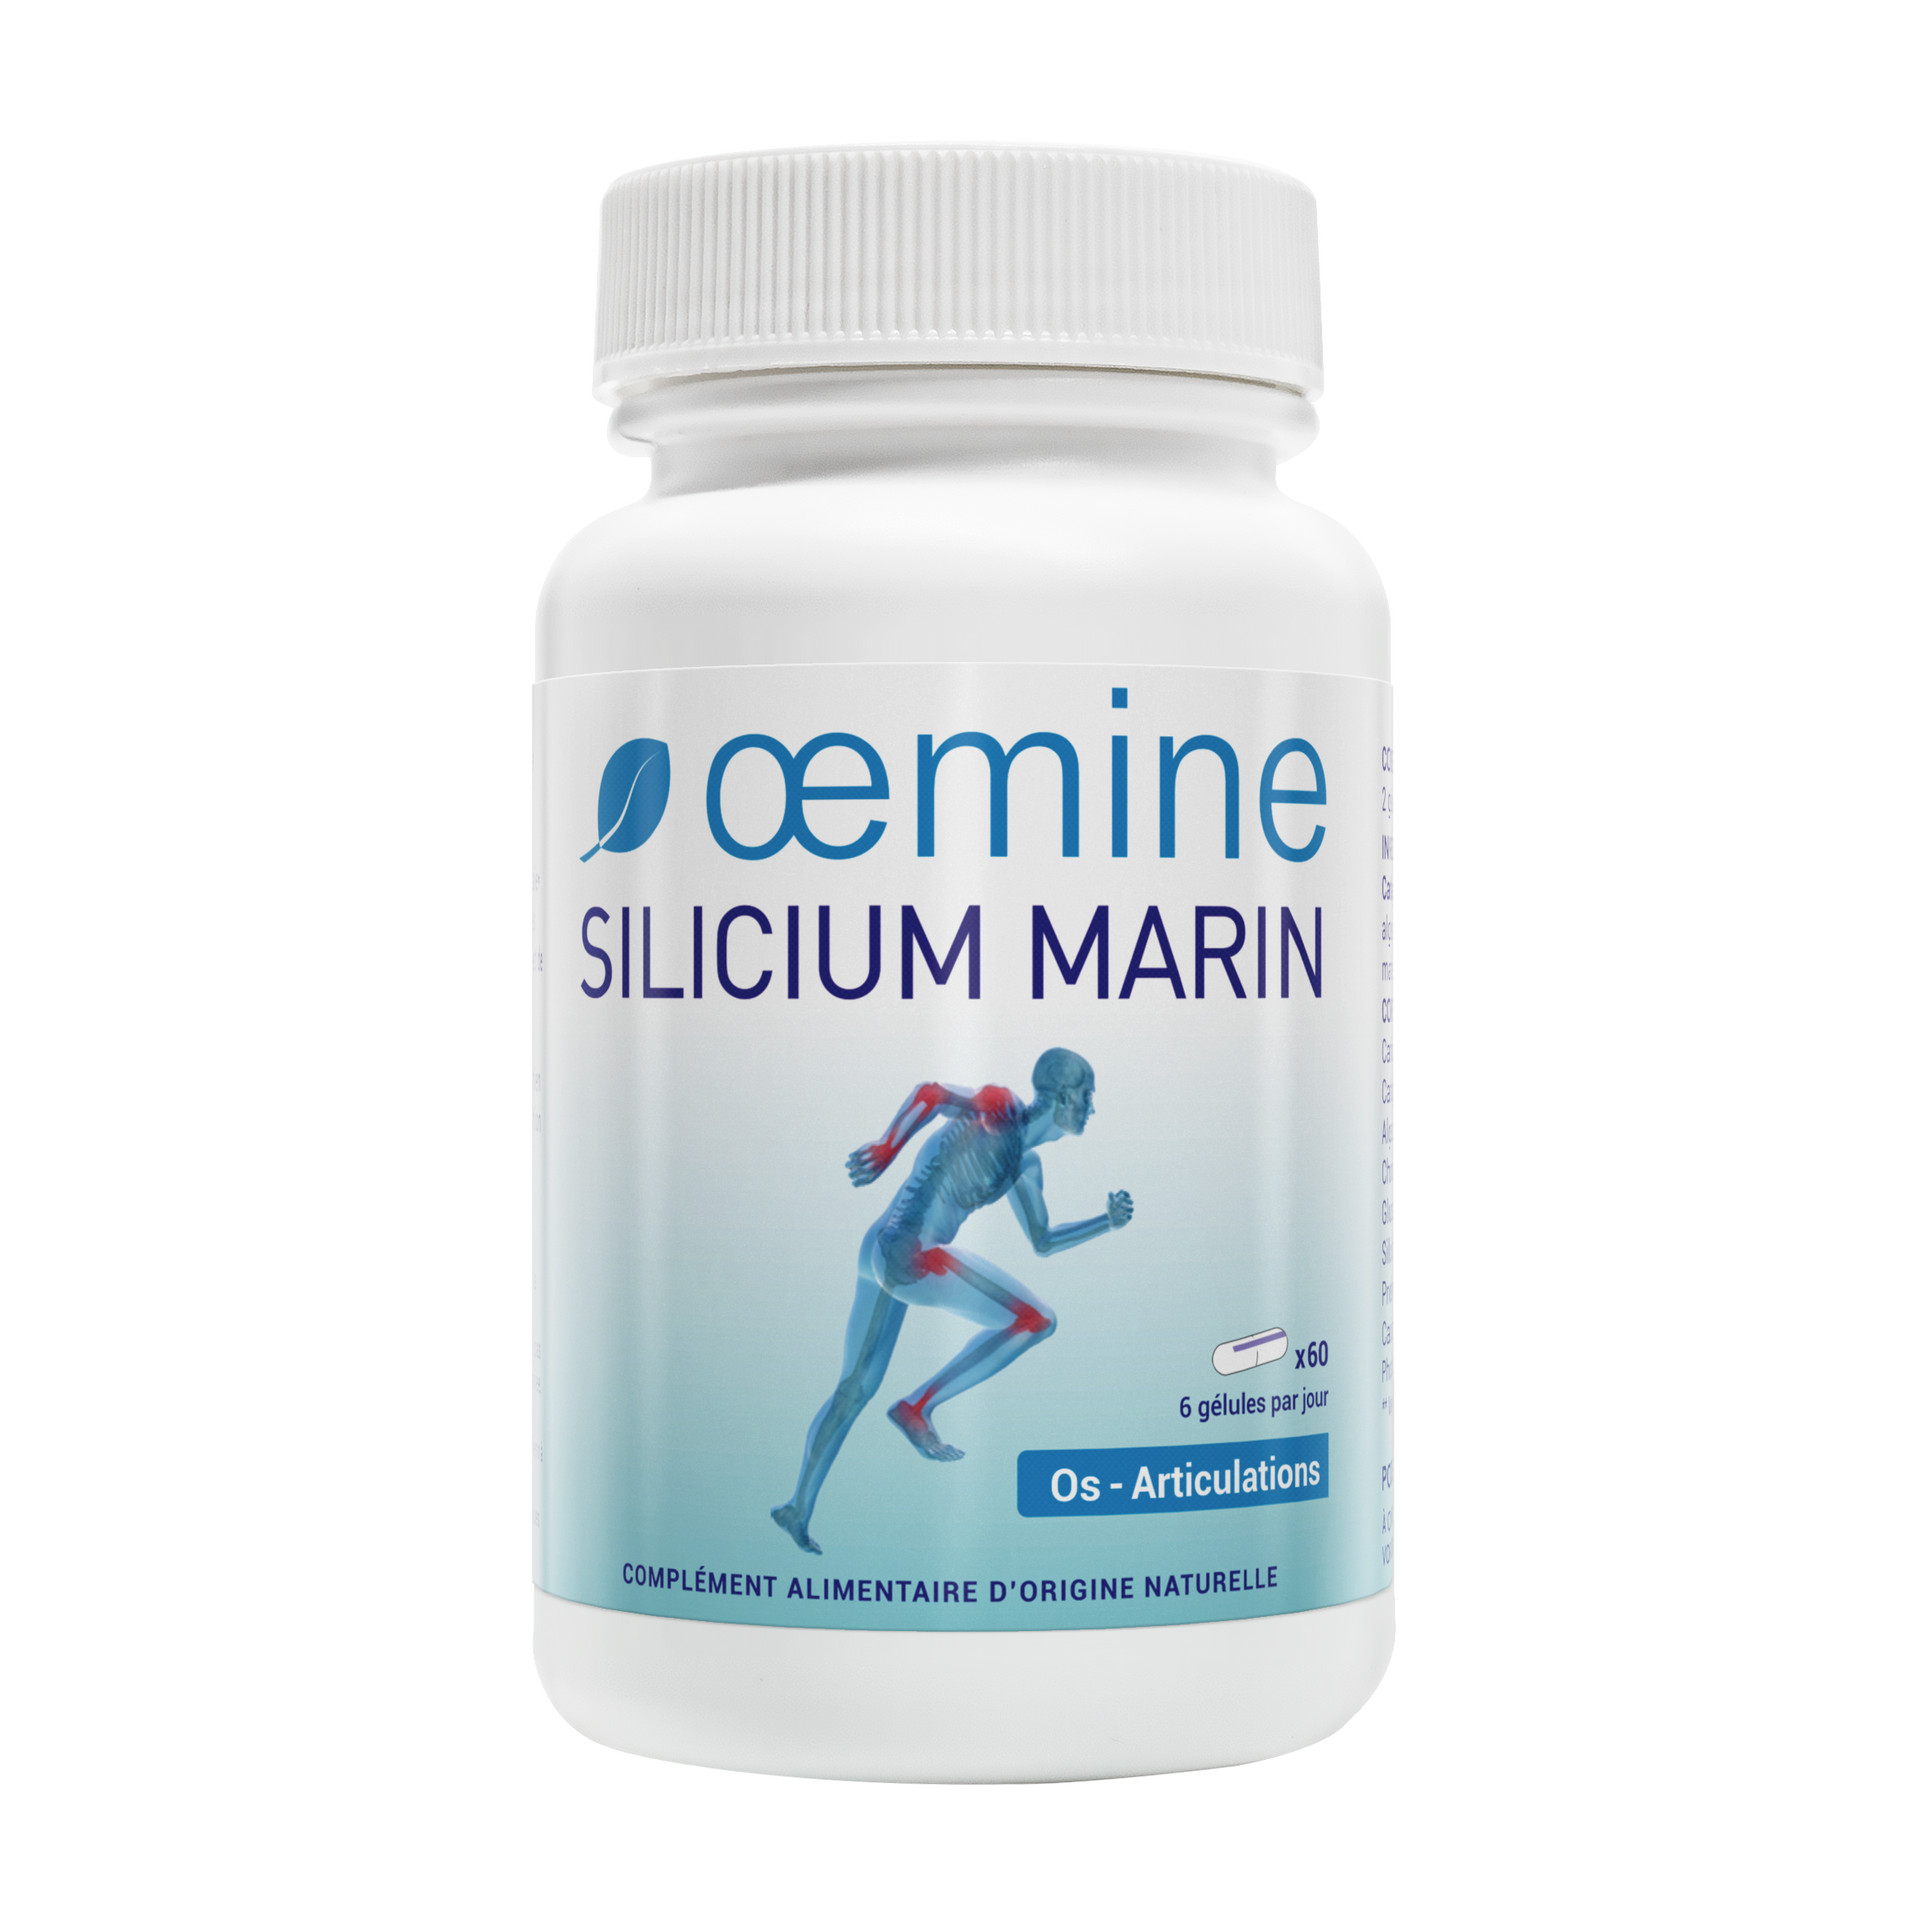 Silicium marin : cartilage de requin - 60 gélules - OEMINE